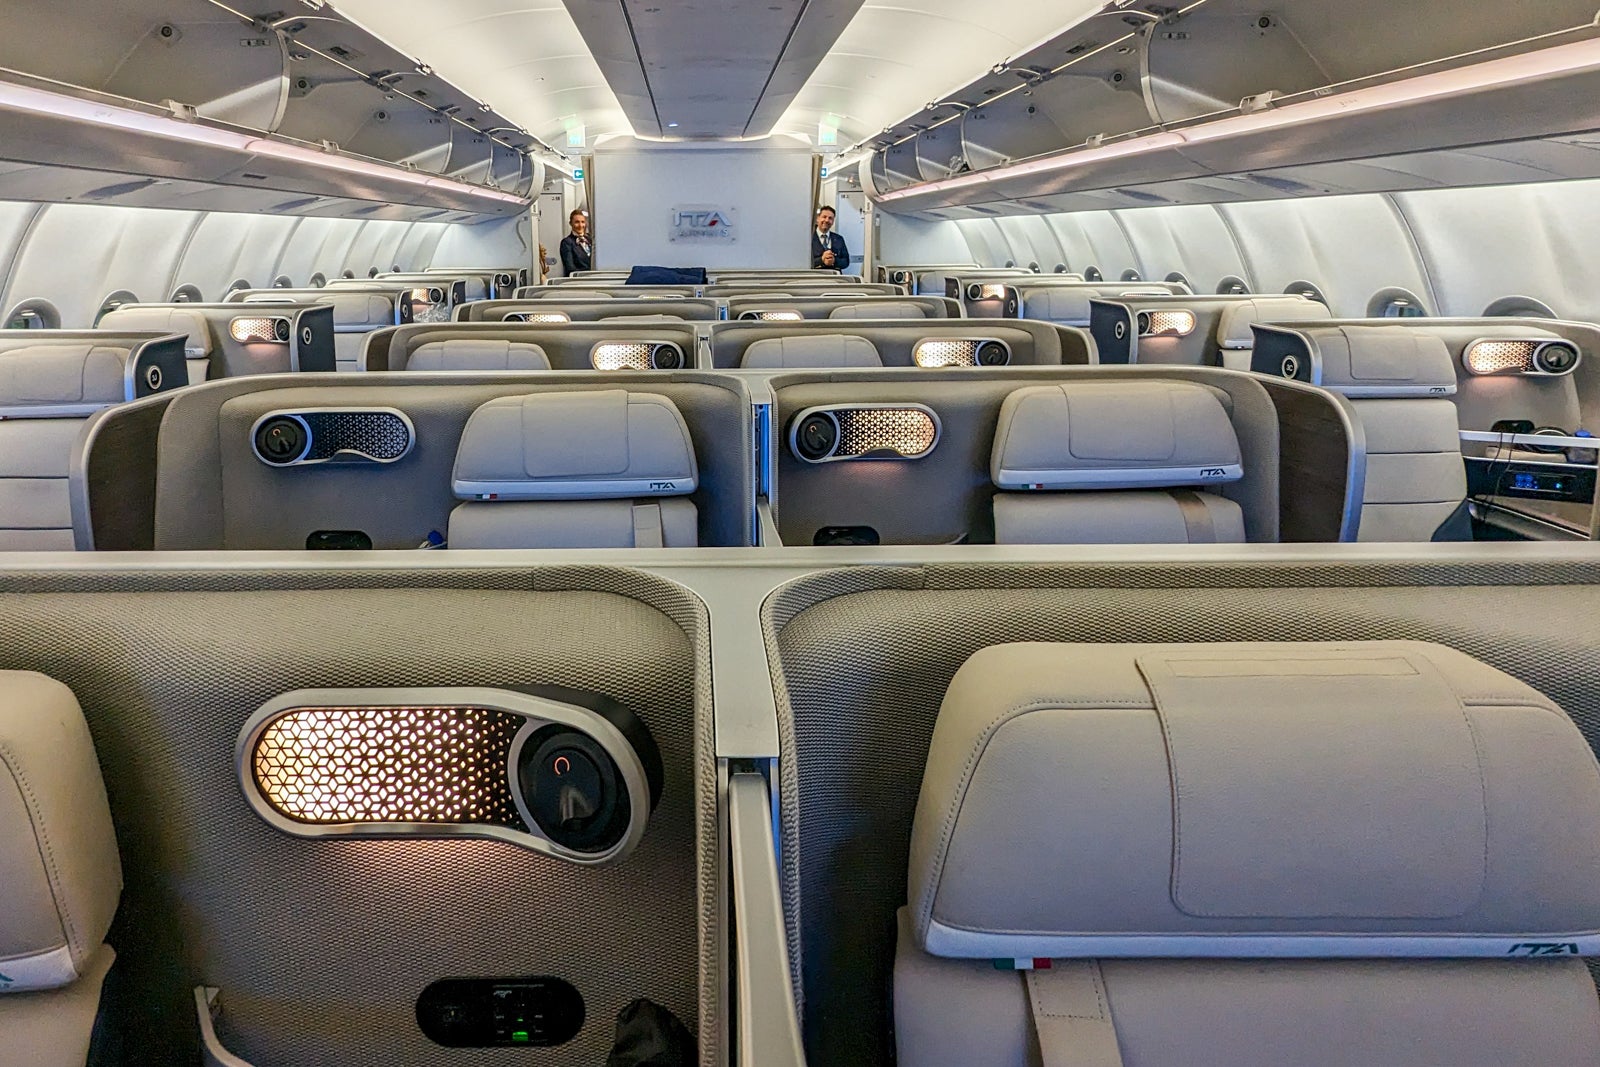 ITA A339neo business class